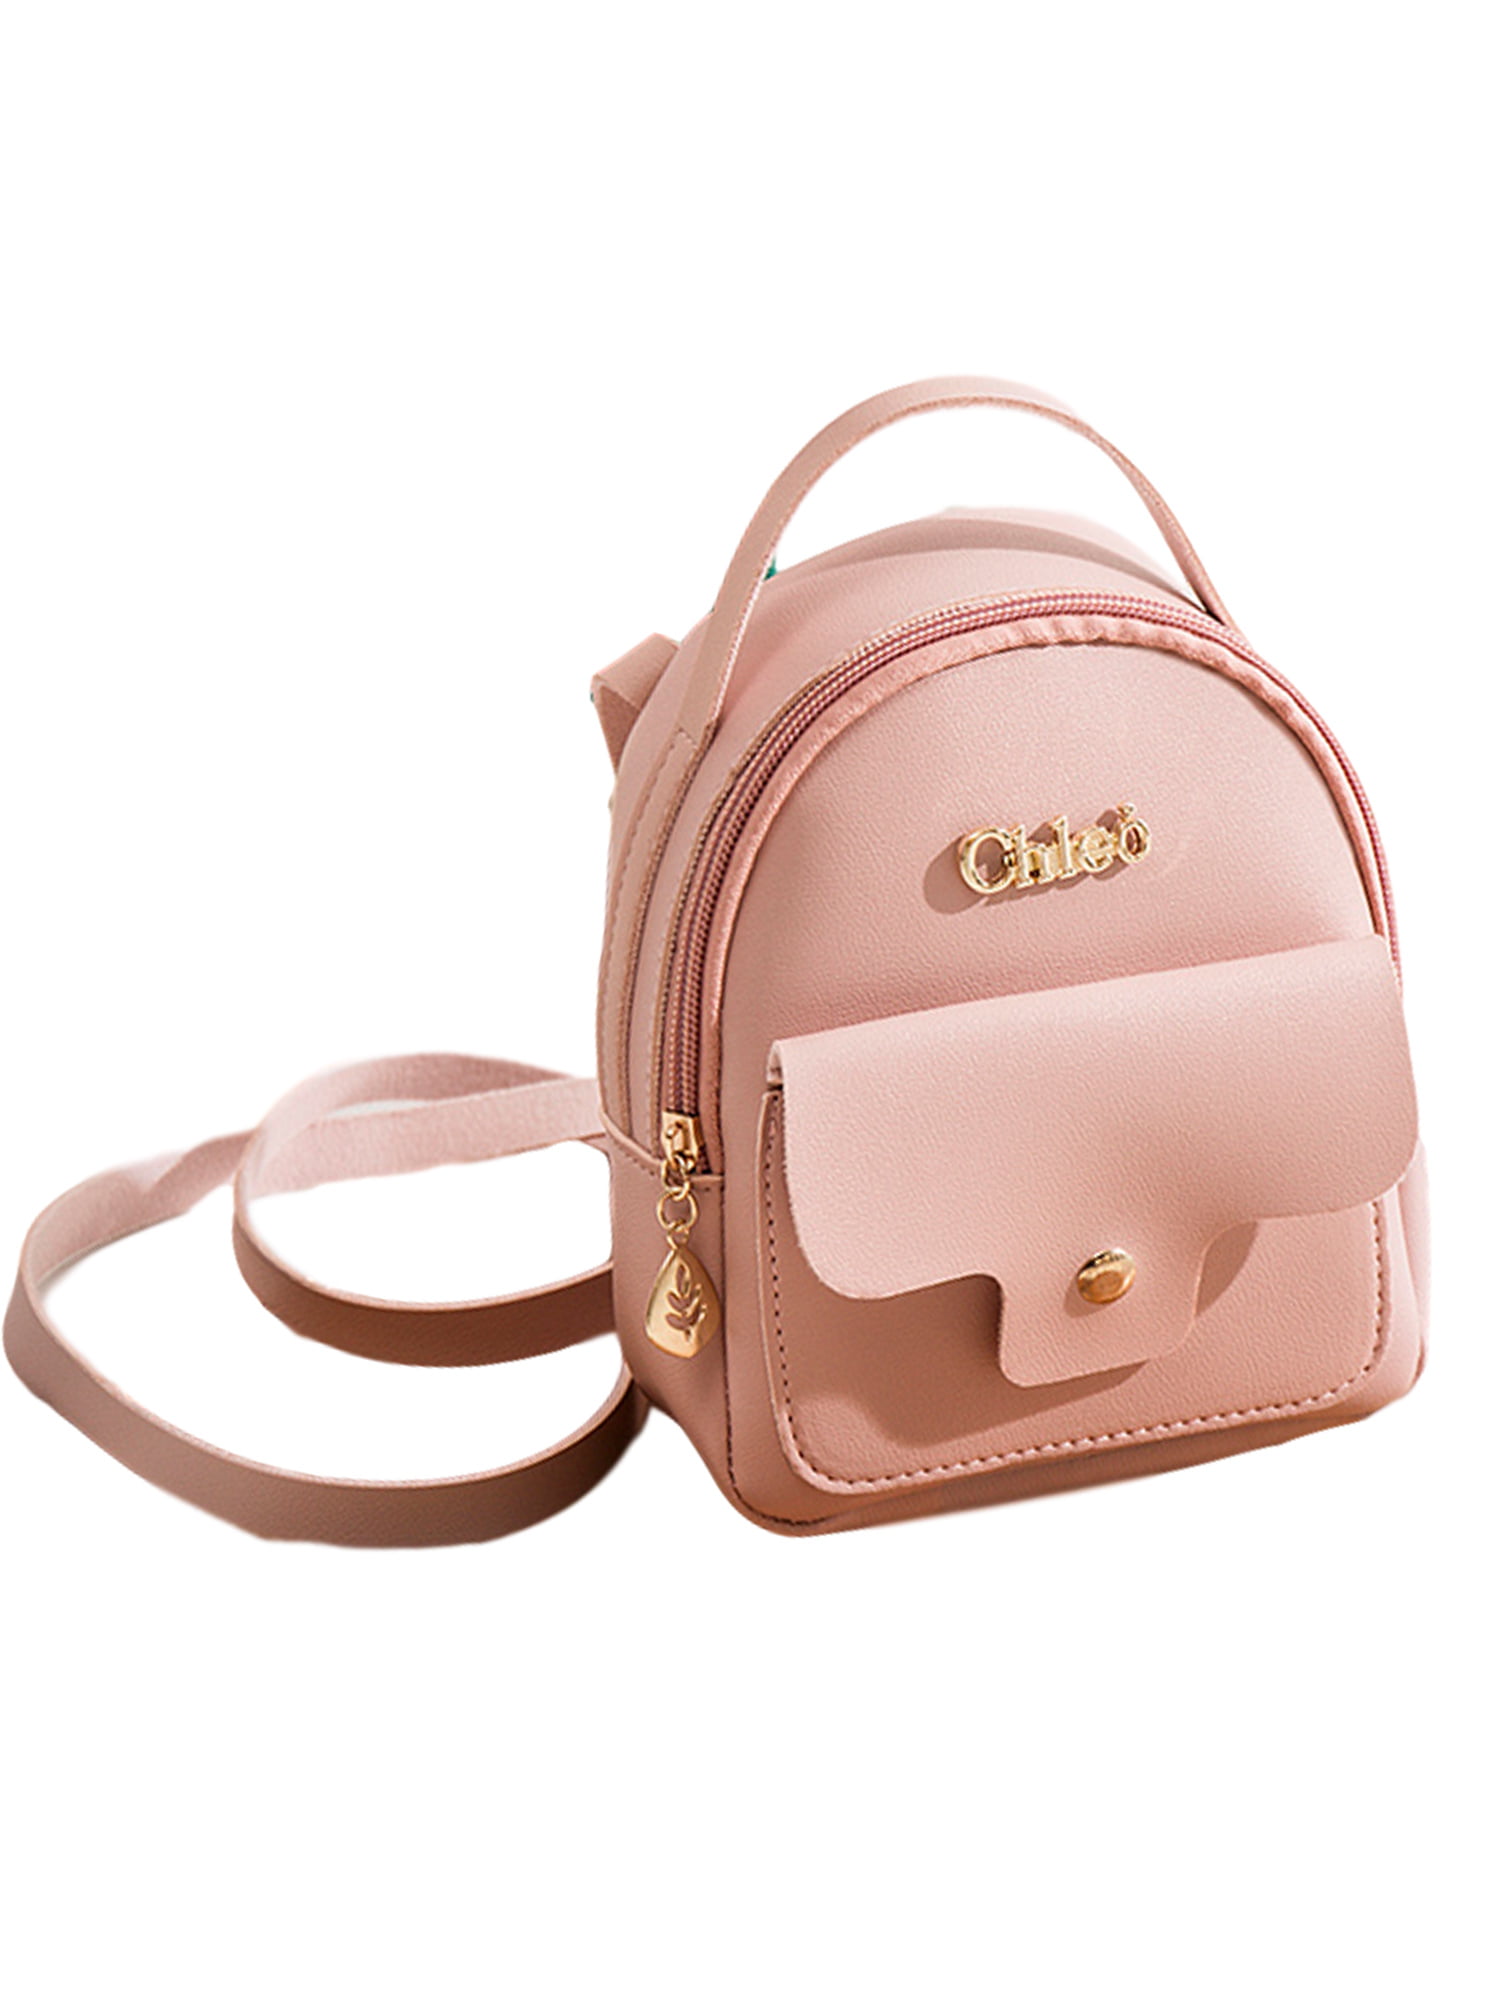 ALTOSY Mini Women Backpack Handbag Genuine Leather Fashion Casual Daypack Cute Shoulder Rucksack S54, Wine Red